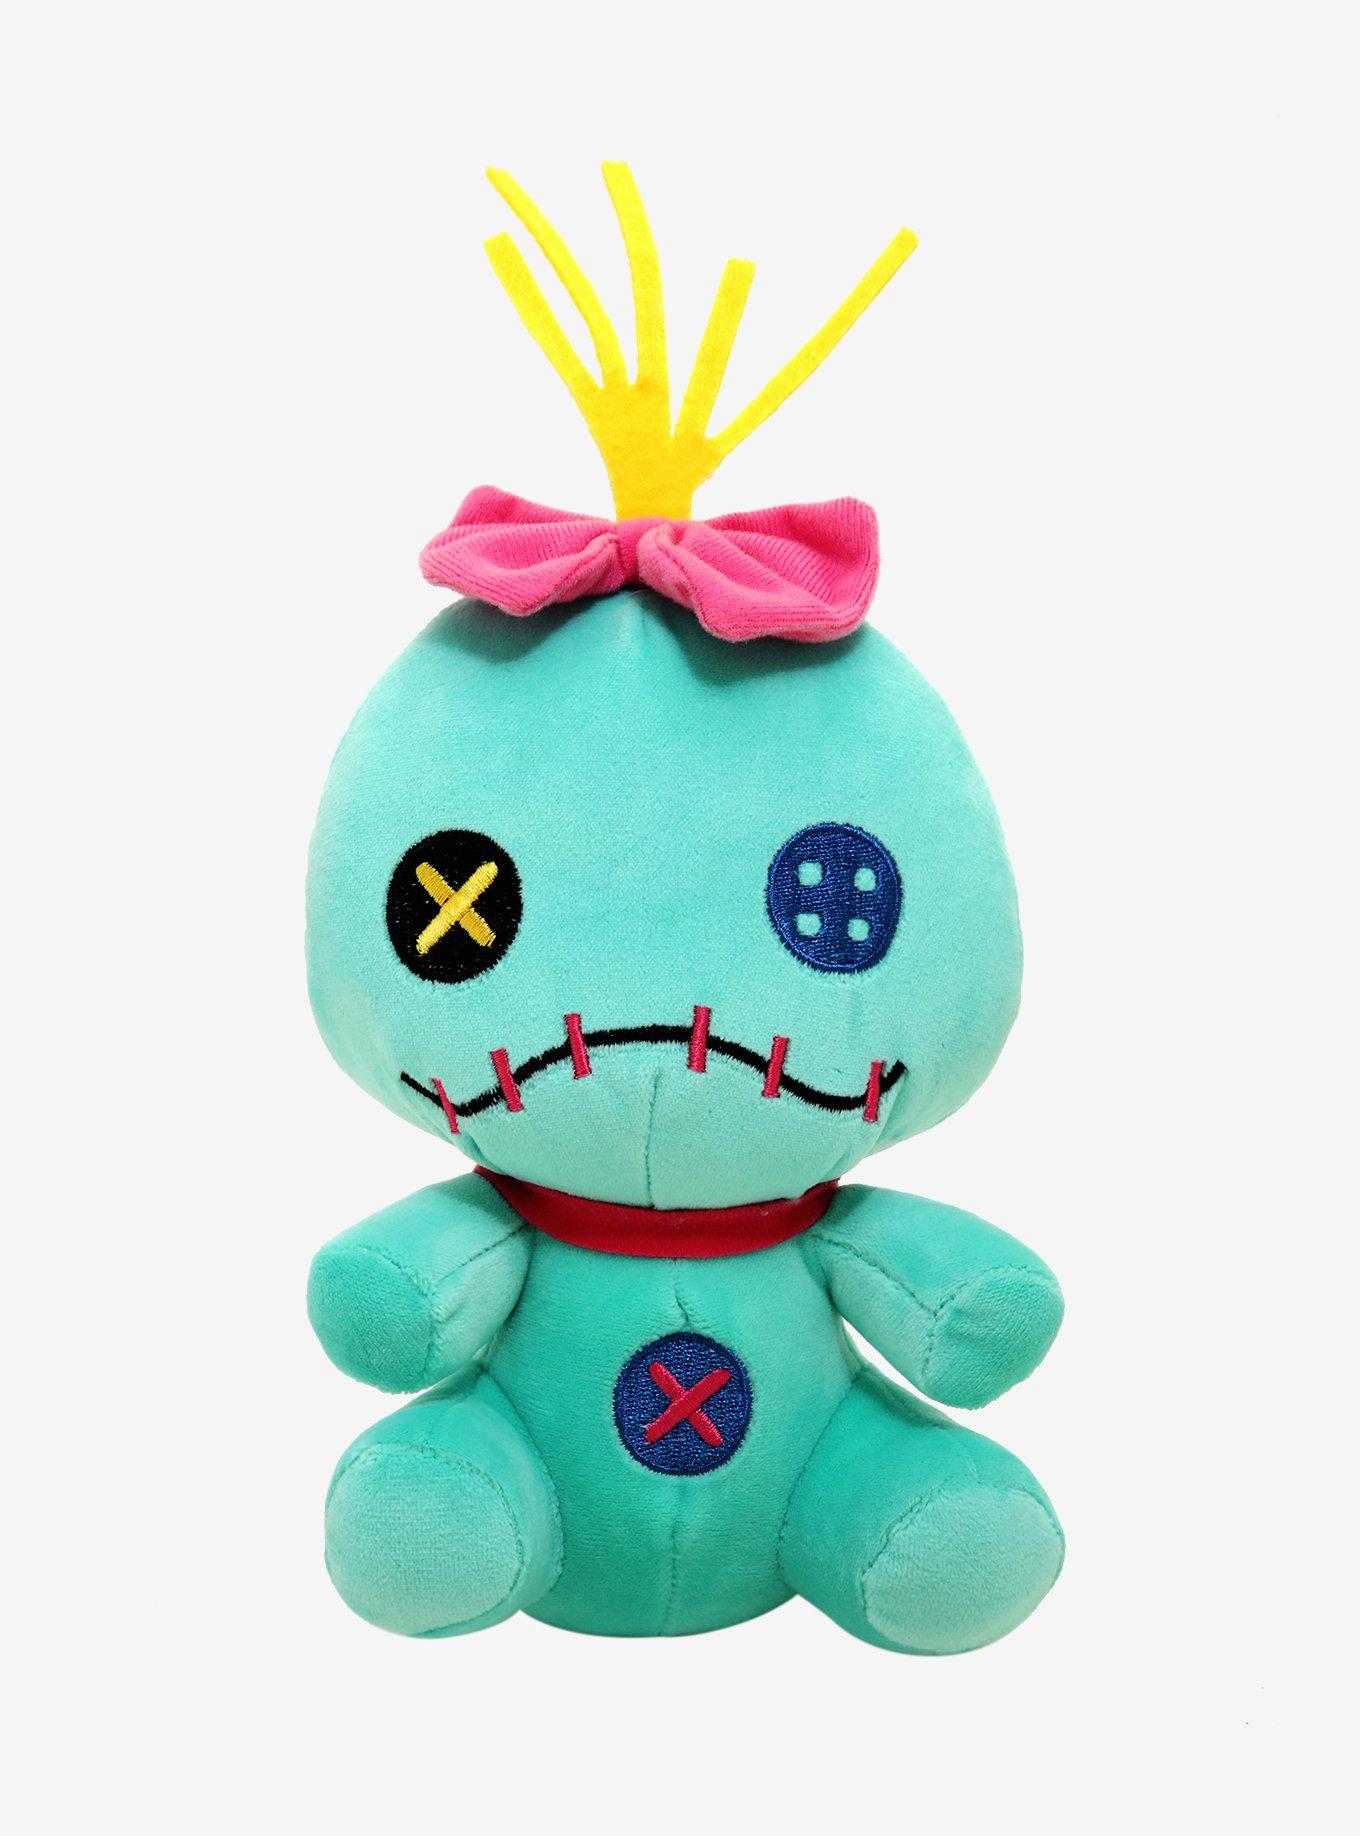 Shop Lilo Stitch Scrump Plush Toy online